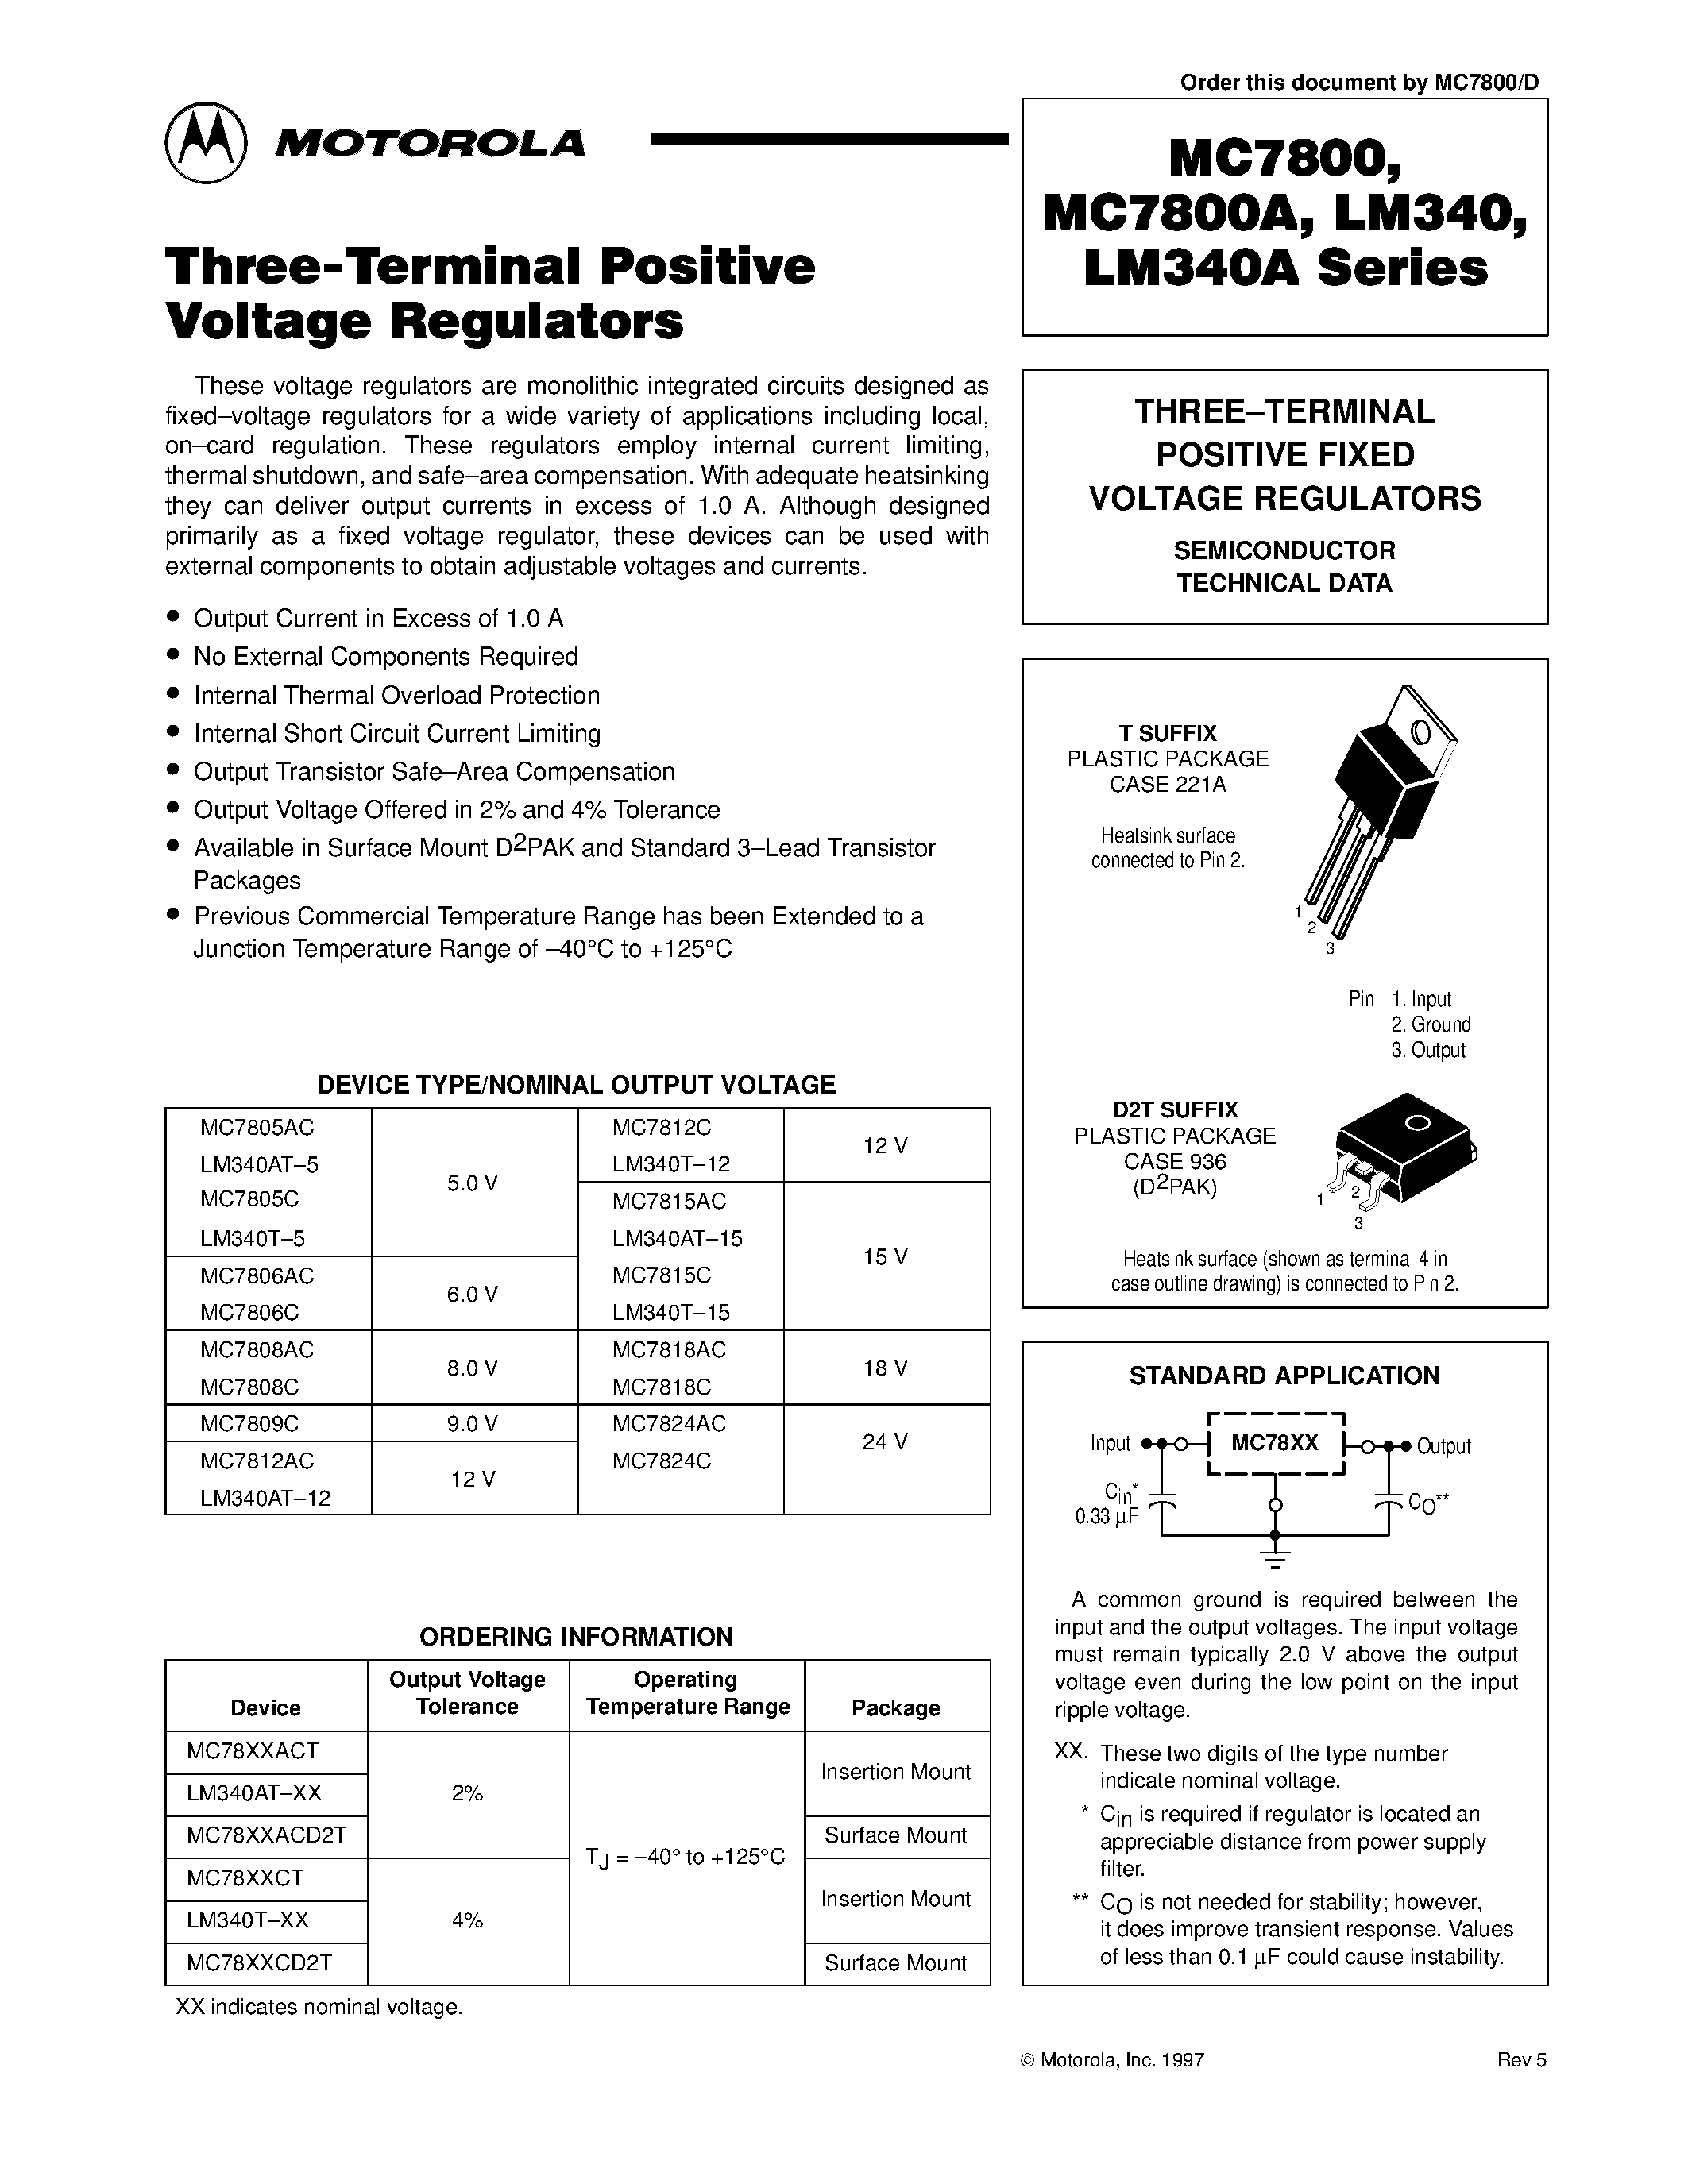 Datasheet MC7809C - THREE TERMINAL POSITIVE FIXED VOLTAGE REGULATORS page 1